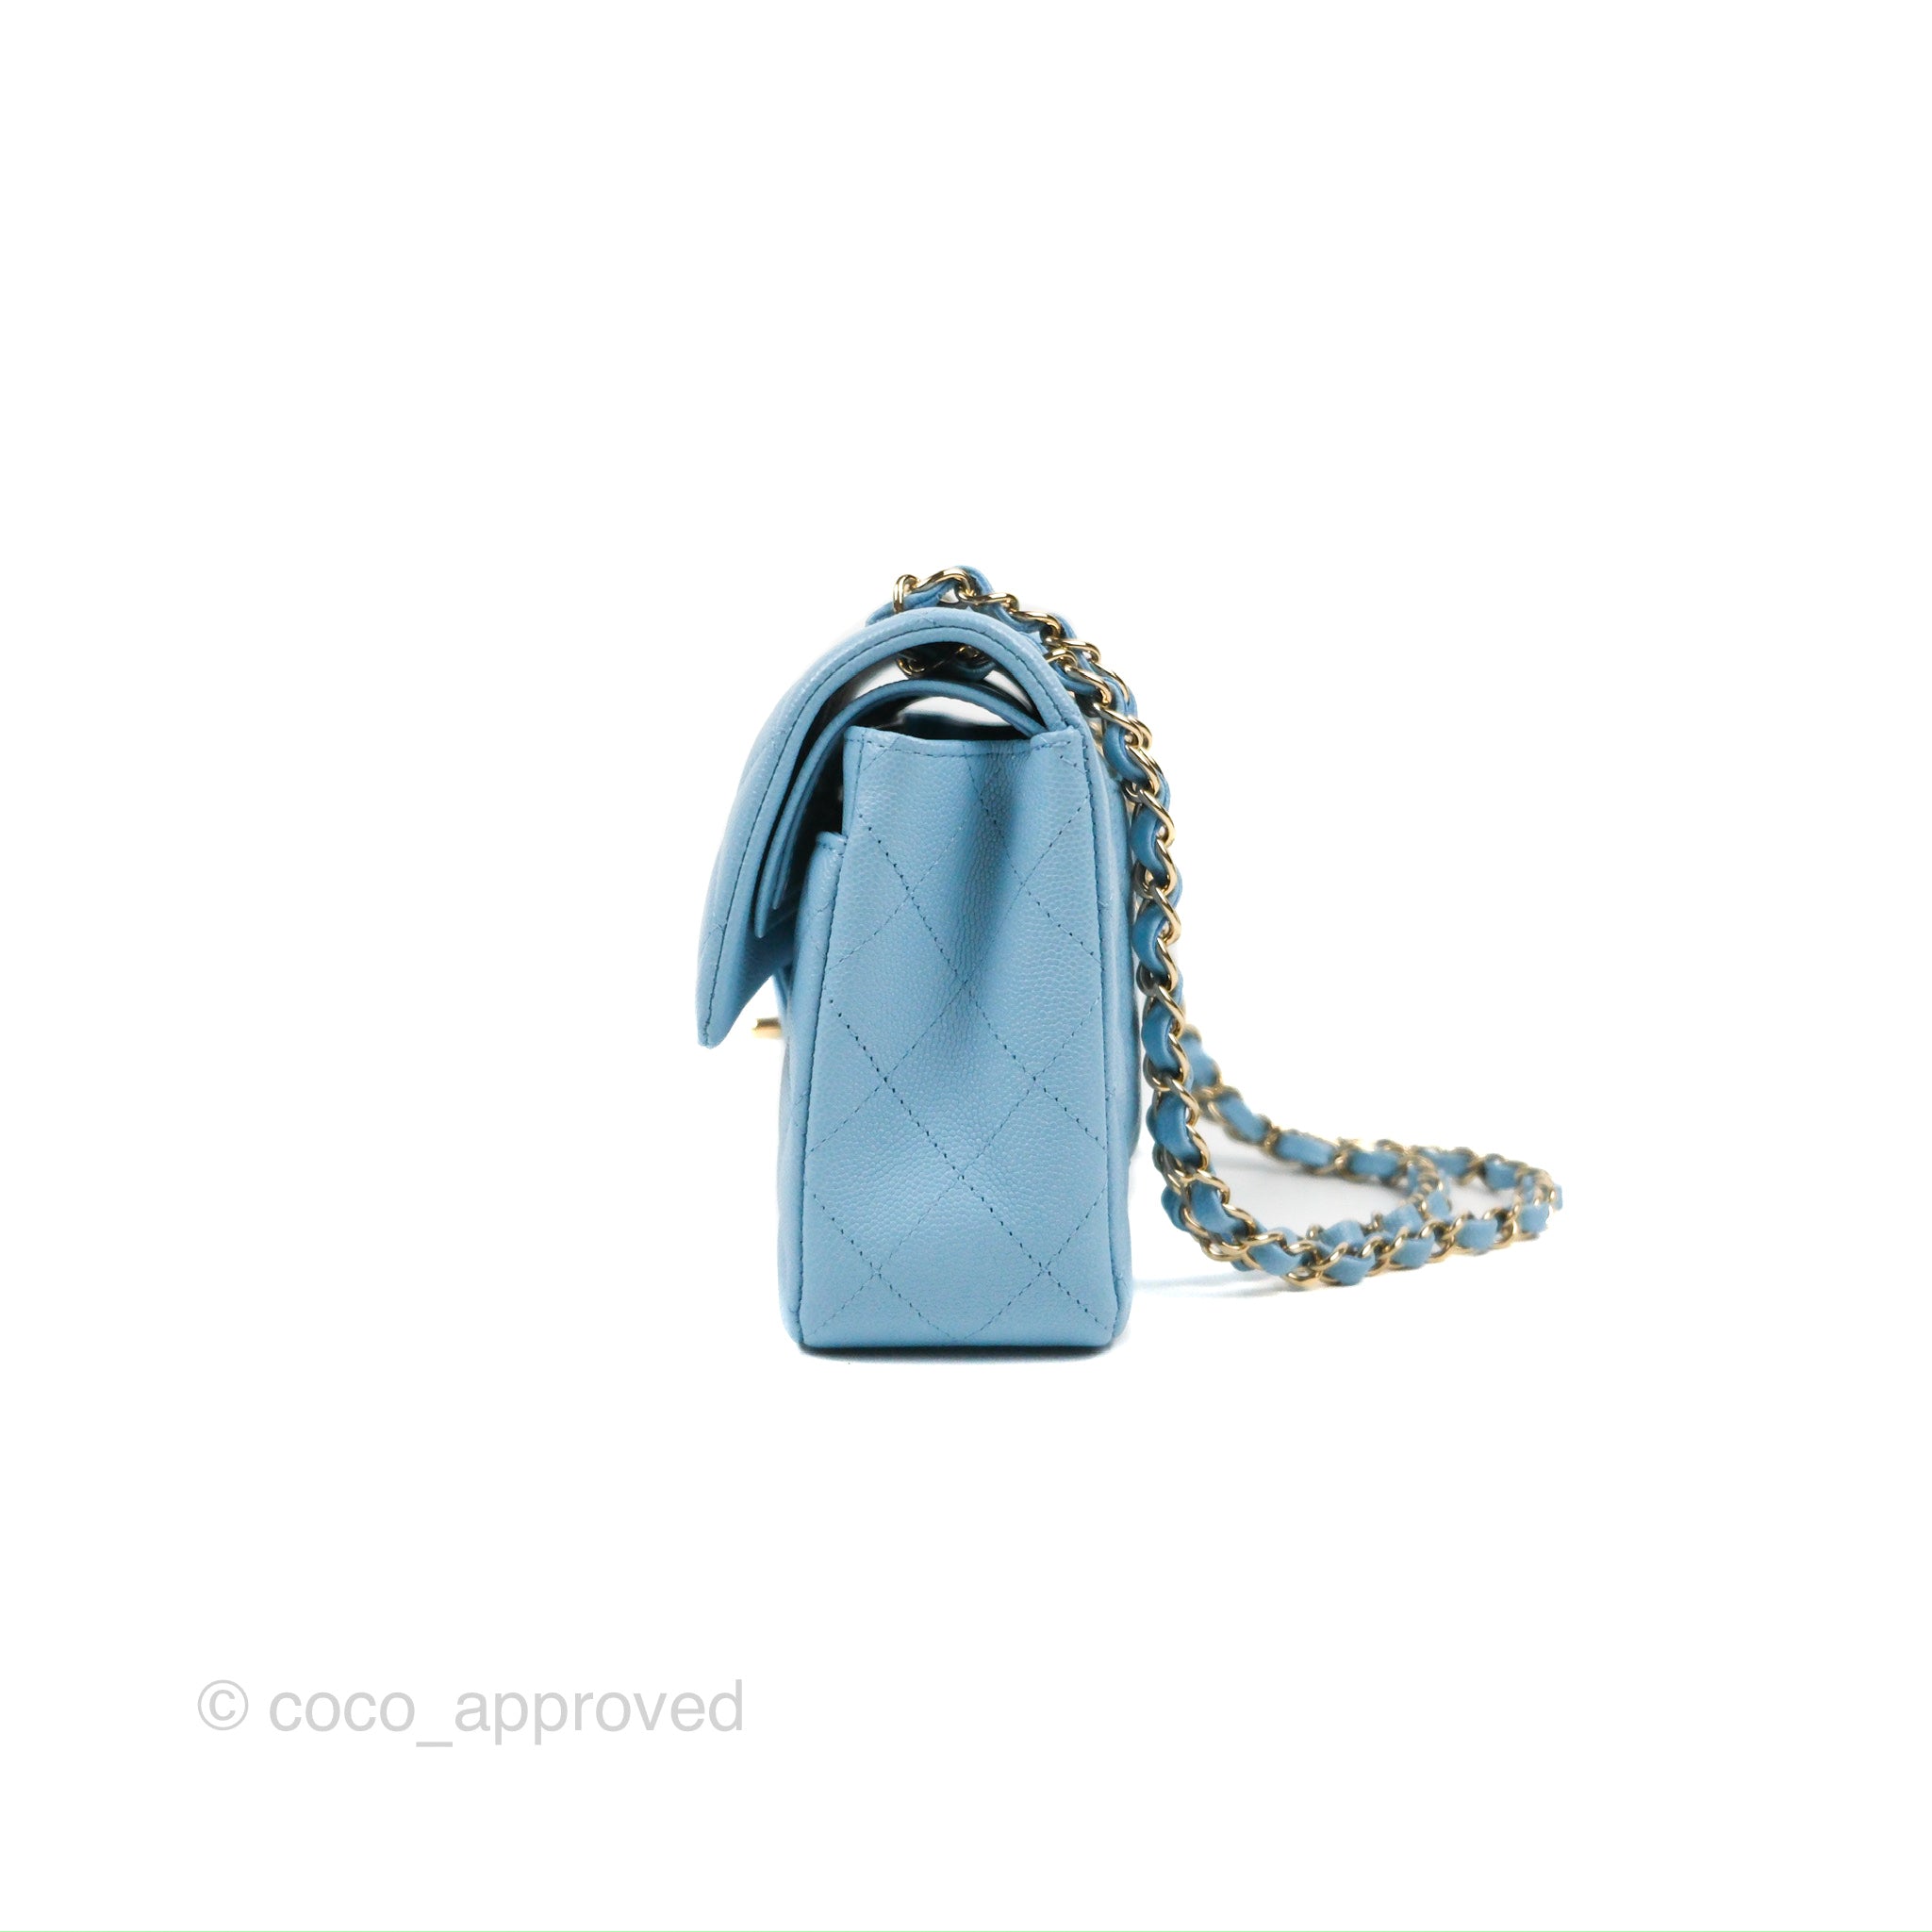 Chanel Medium Flap Tiffany Blue Real VS Fake ❌